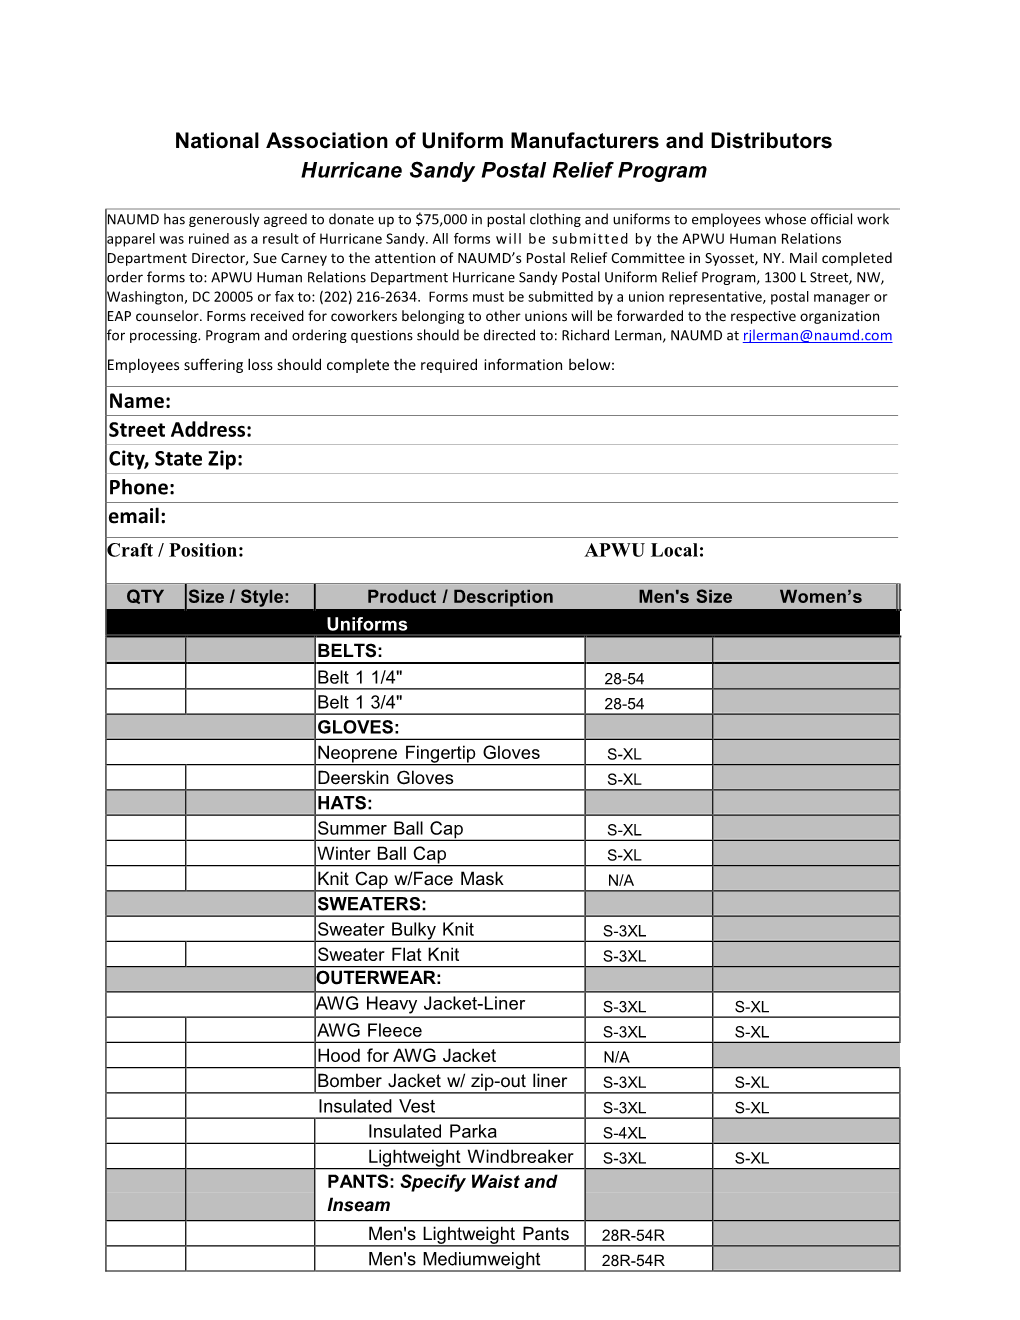 National Association of Uniform Manufacturers and Distributors Hurricane Sandy Postal Relief Program